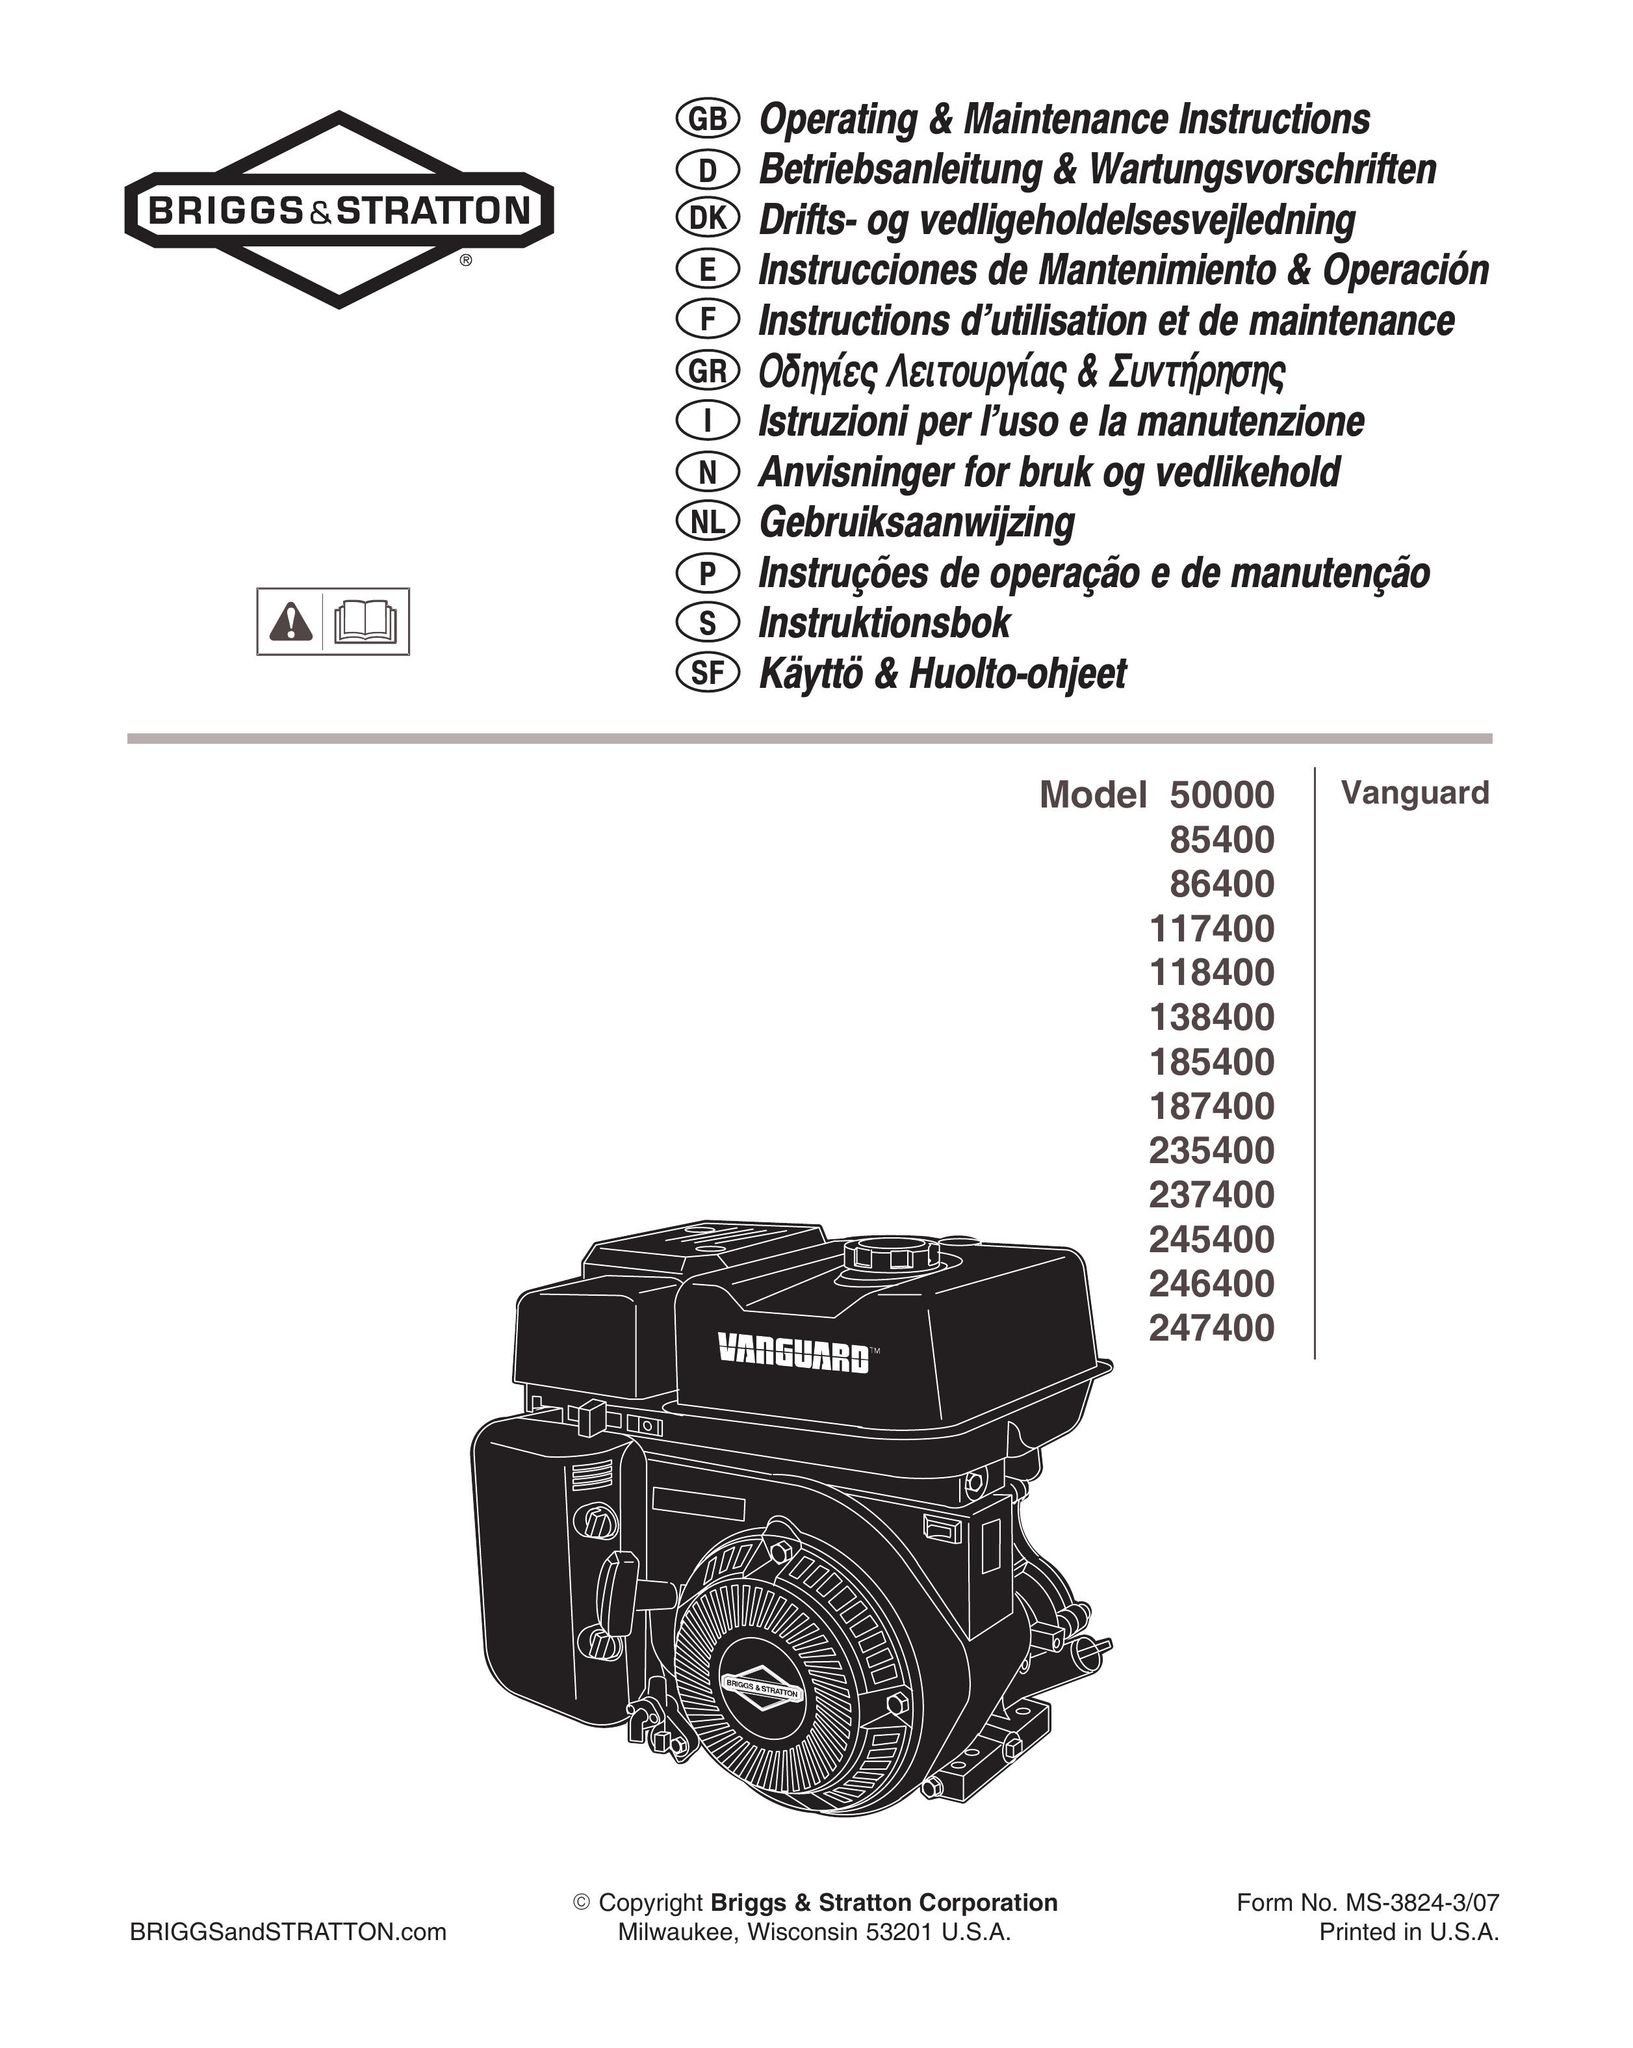 Briggs & Stratton 247400 Plumbing Product User Manual